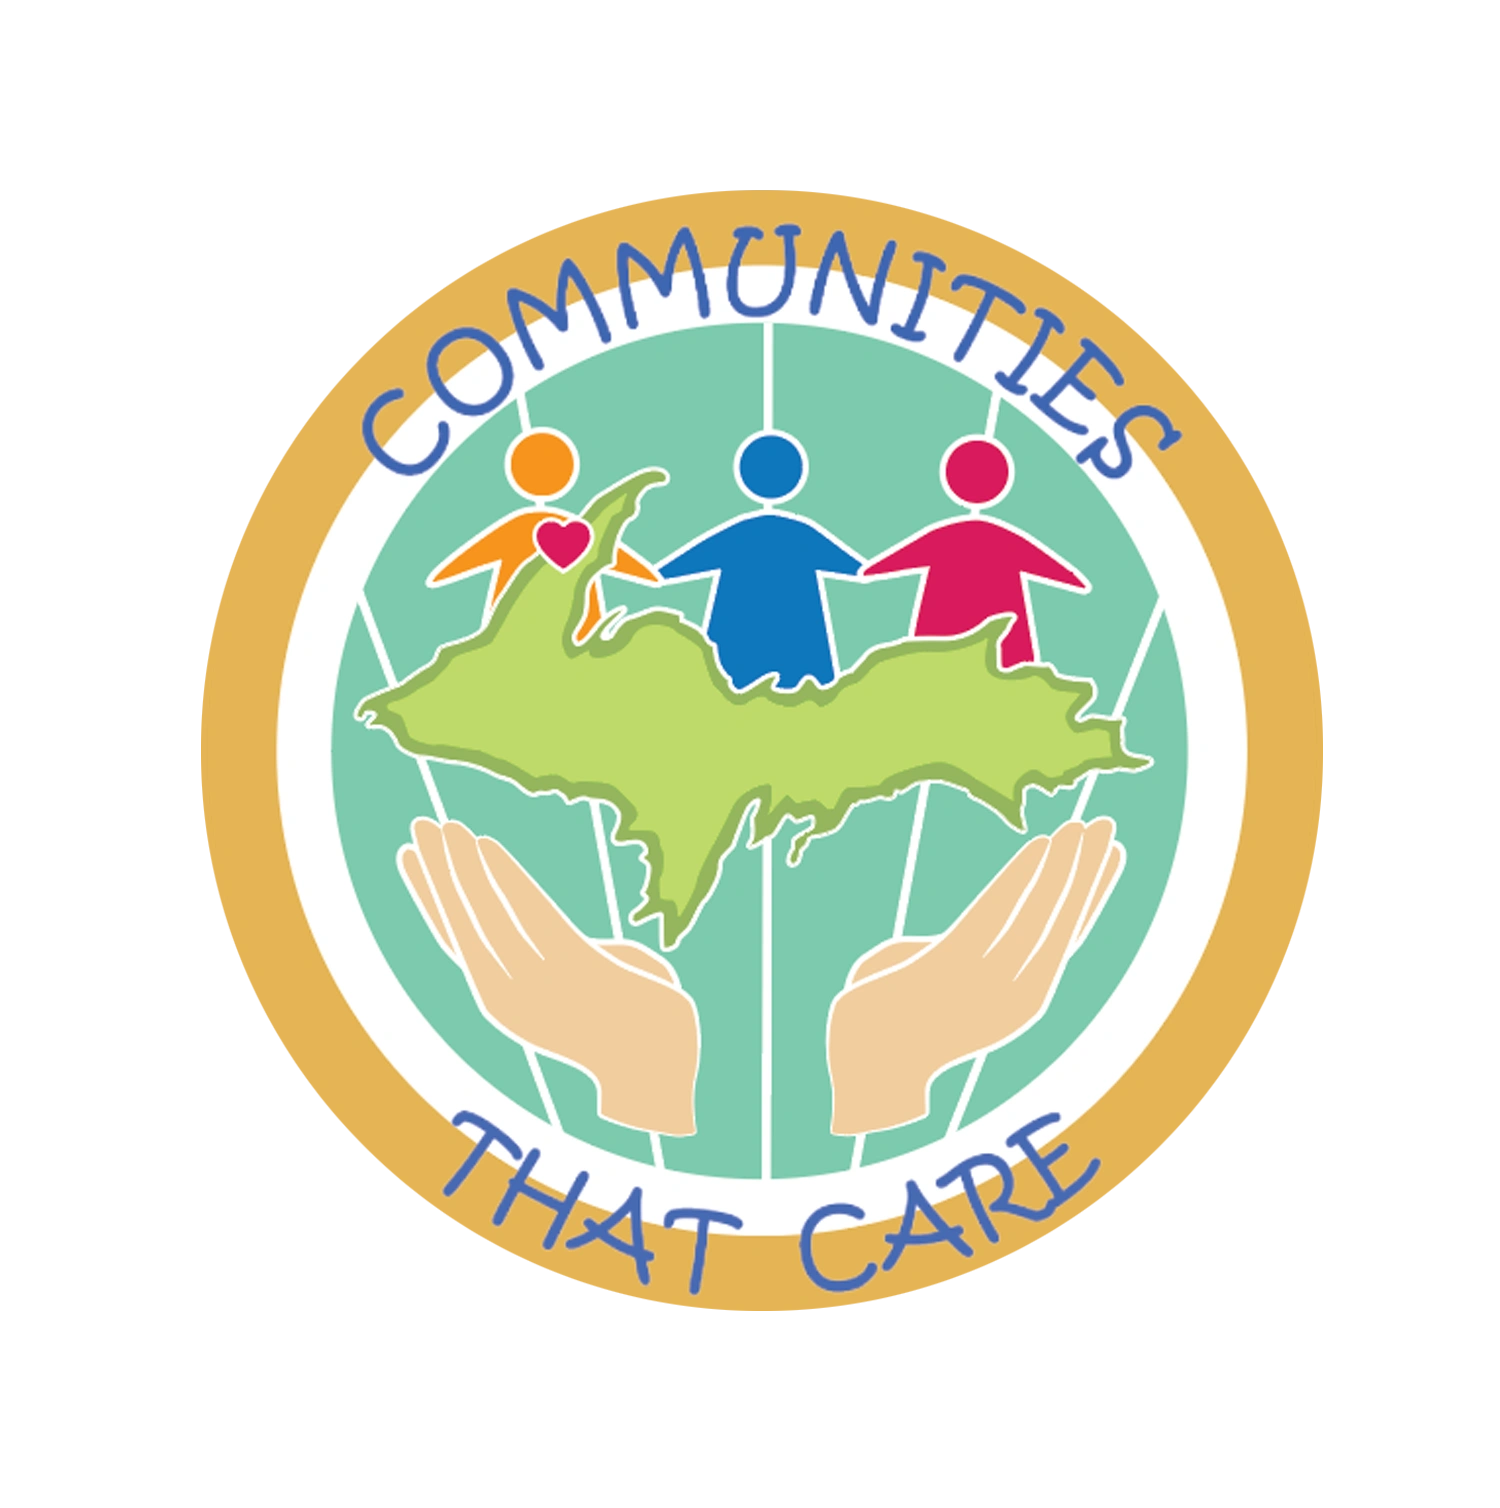 Communities That Care - Wikipedia